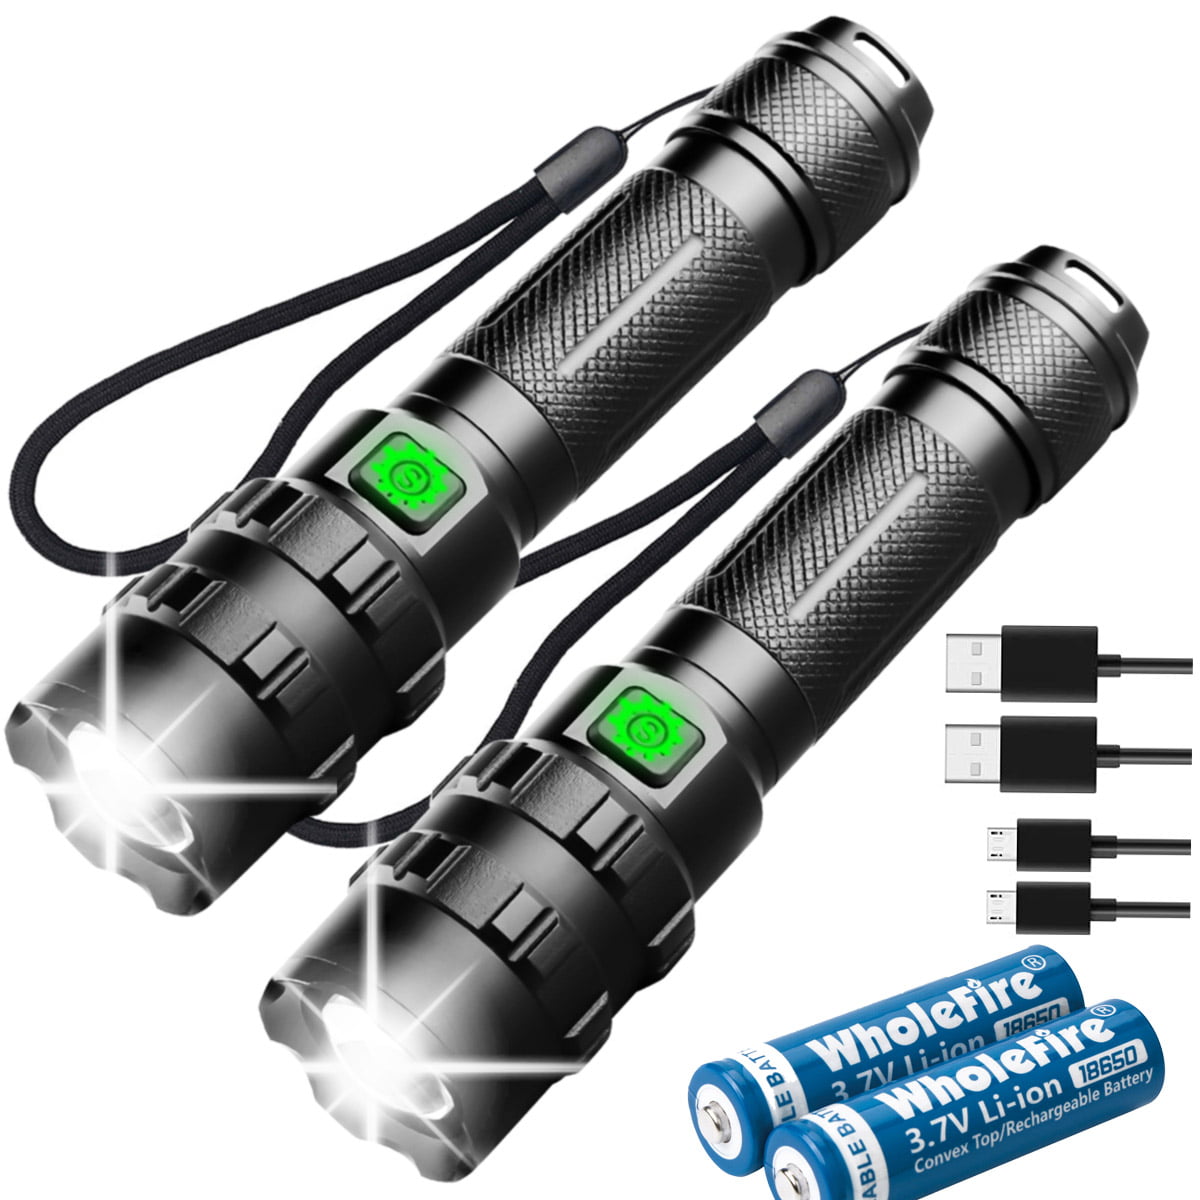 3561 CREE XM-L T6 LED Flashlight Light Lamp High Power Torch Focus Bright Hiking 